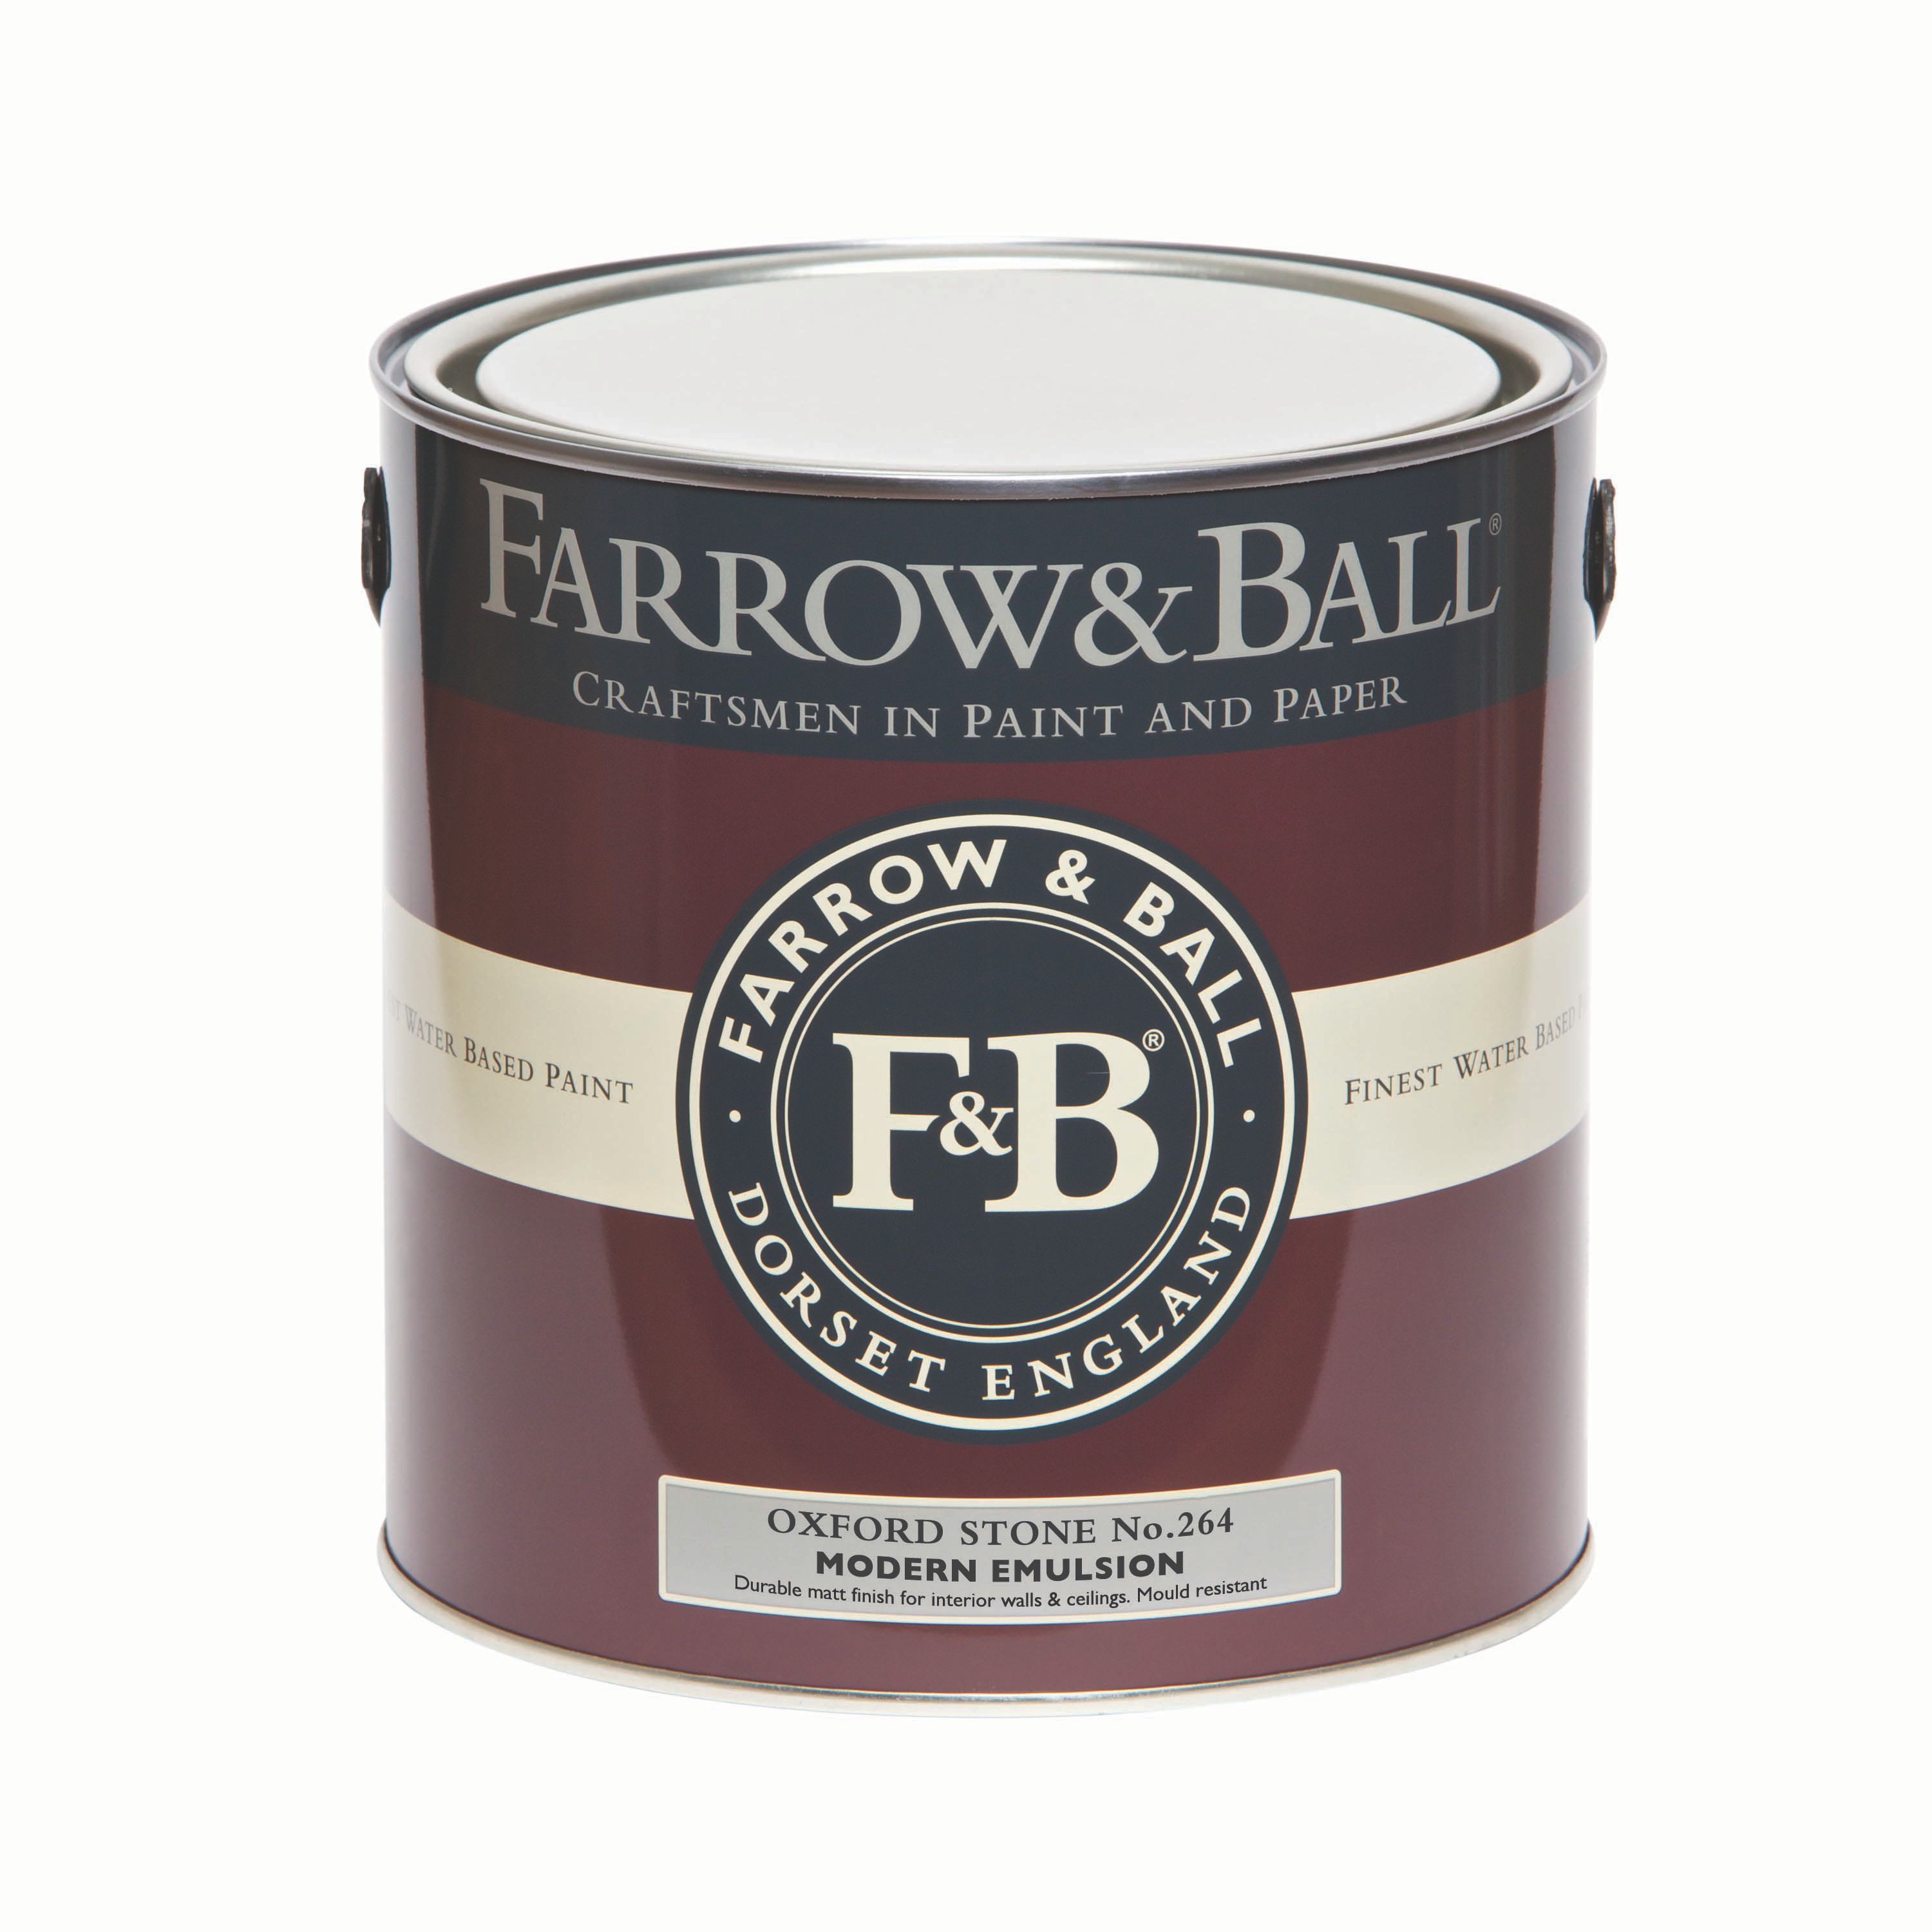 Farrow & Ball Modern Oxford stone Matt Emulsion paint, 2.5L